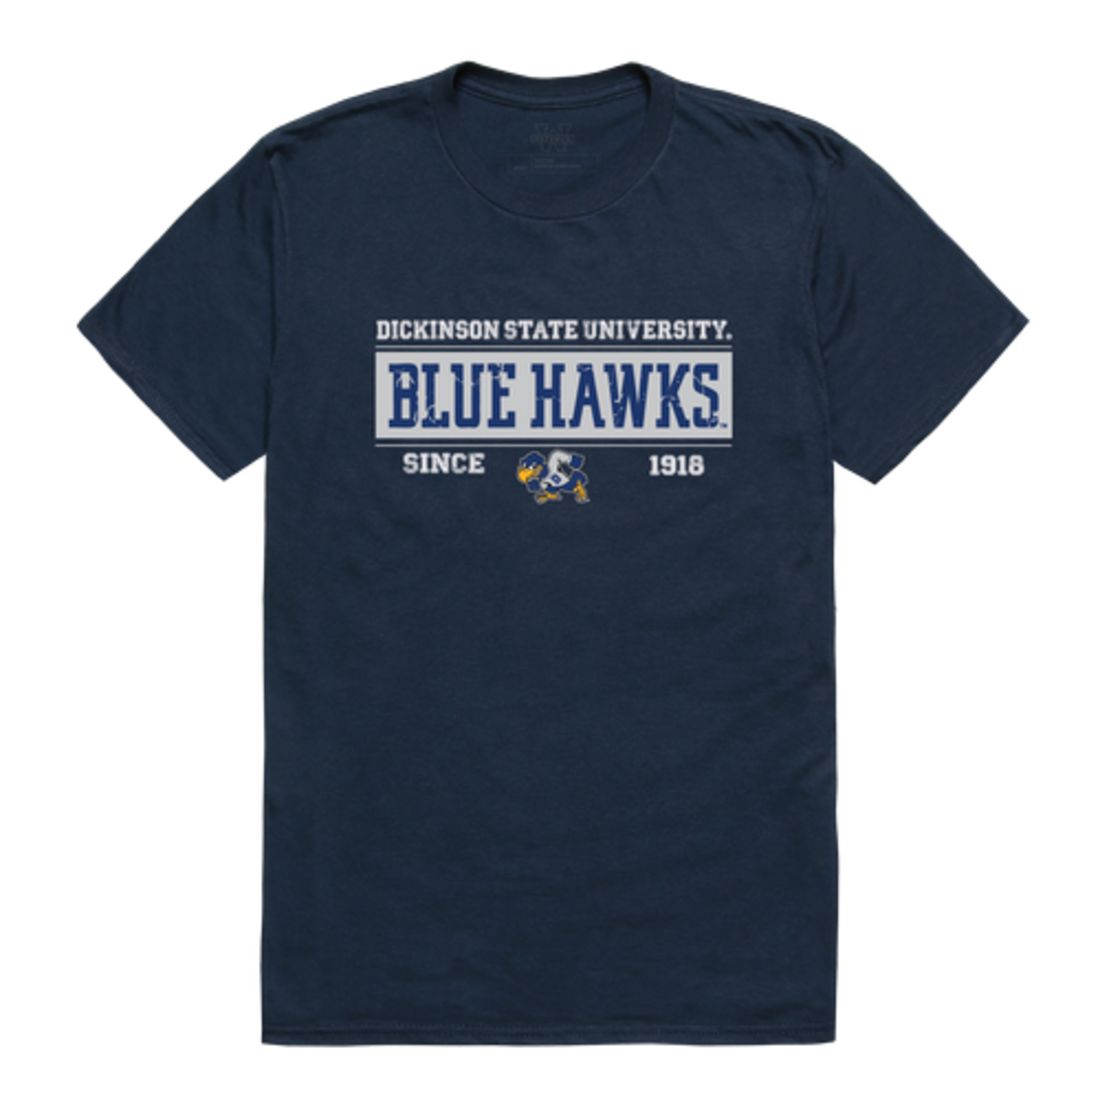 Dickinson State University Blue Hawks Established T-Shirt Tee